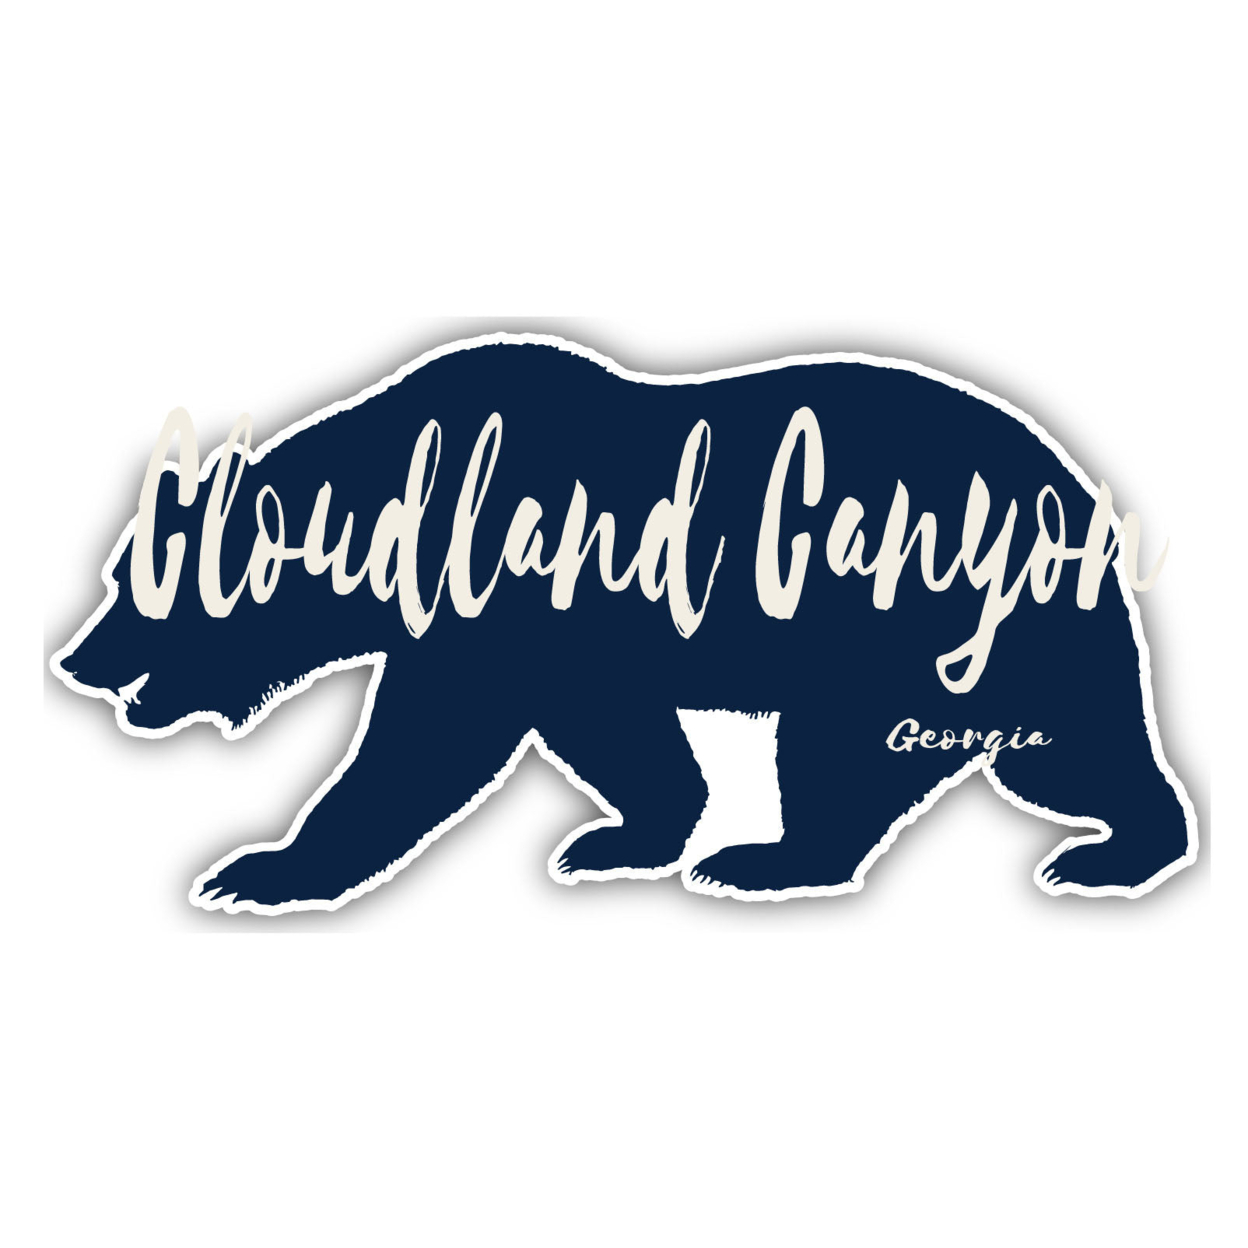 Cloudland Canyon Georgia Souvenir Decorative Stickers (Choose Theme And Size) - 4-Pack, 6-Inch, Bear